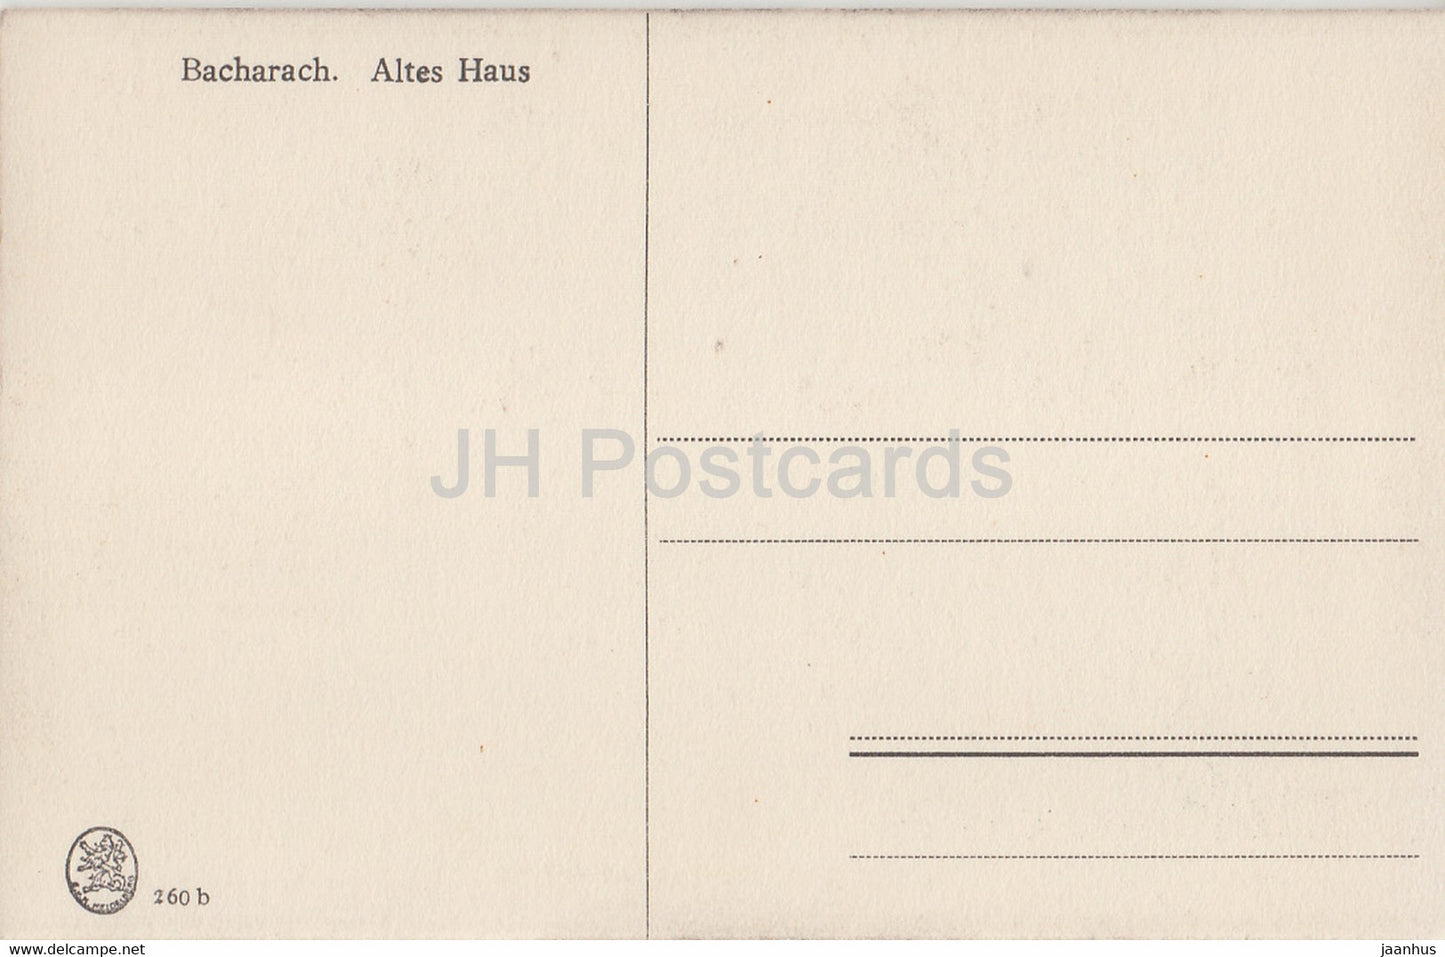 Bacharach - Altes Haus - old postcard - Germany - unused